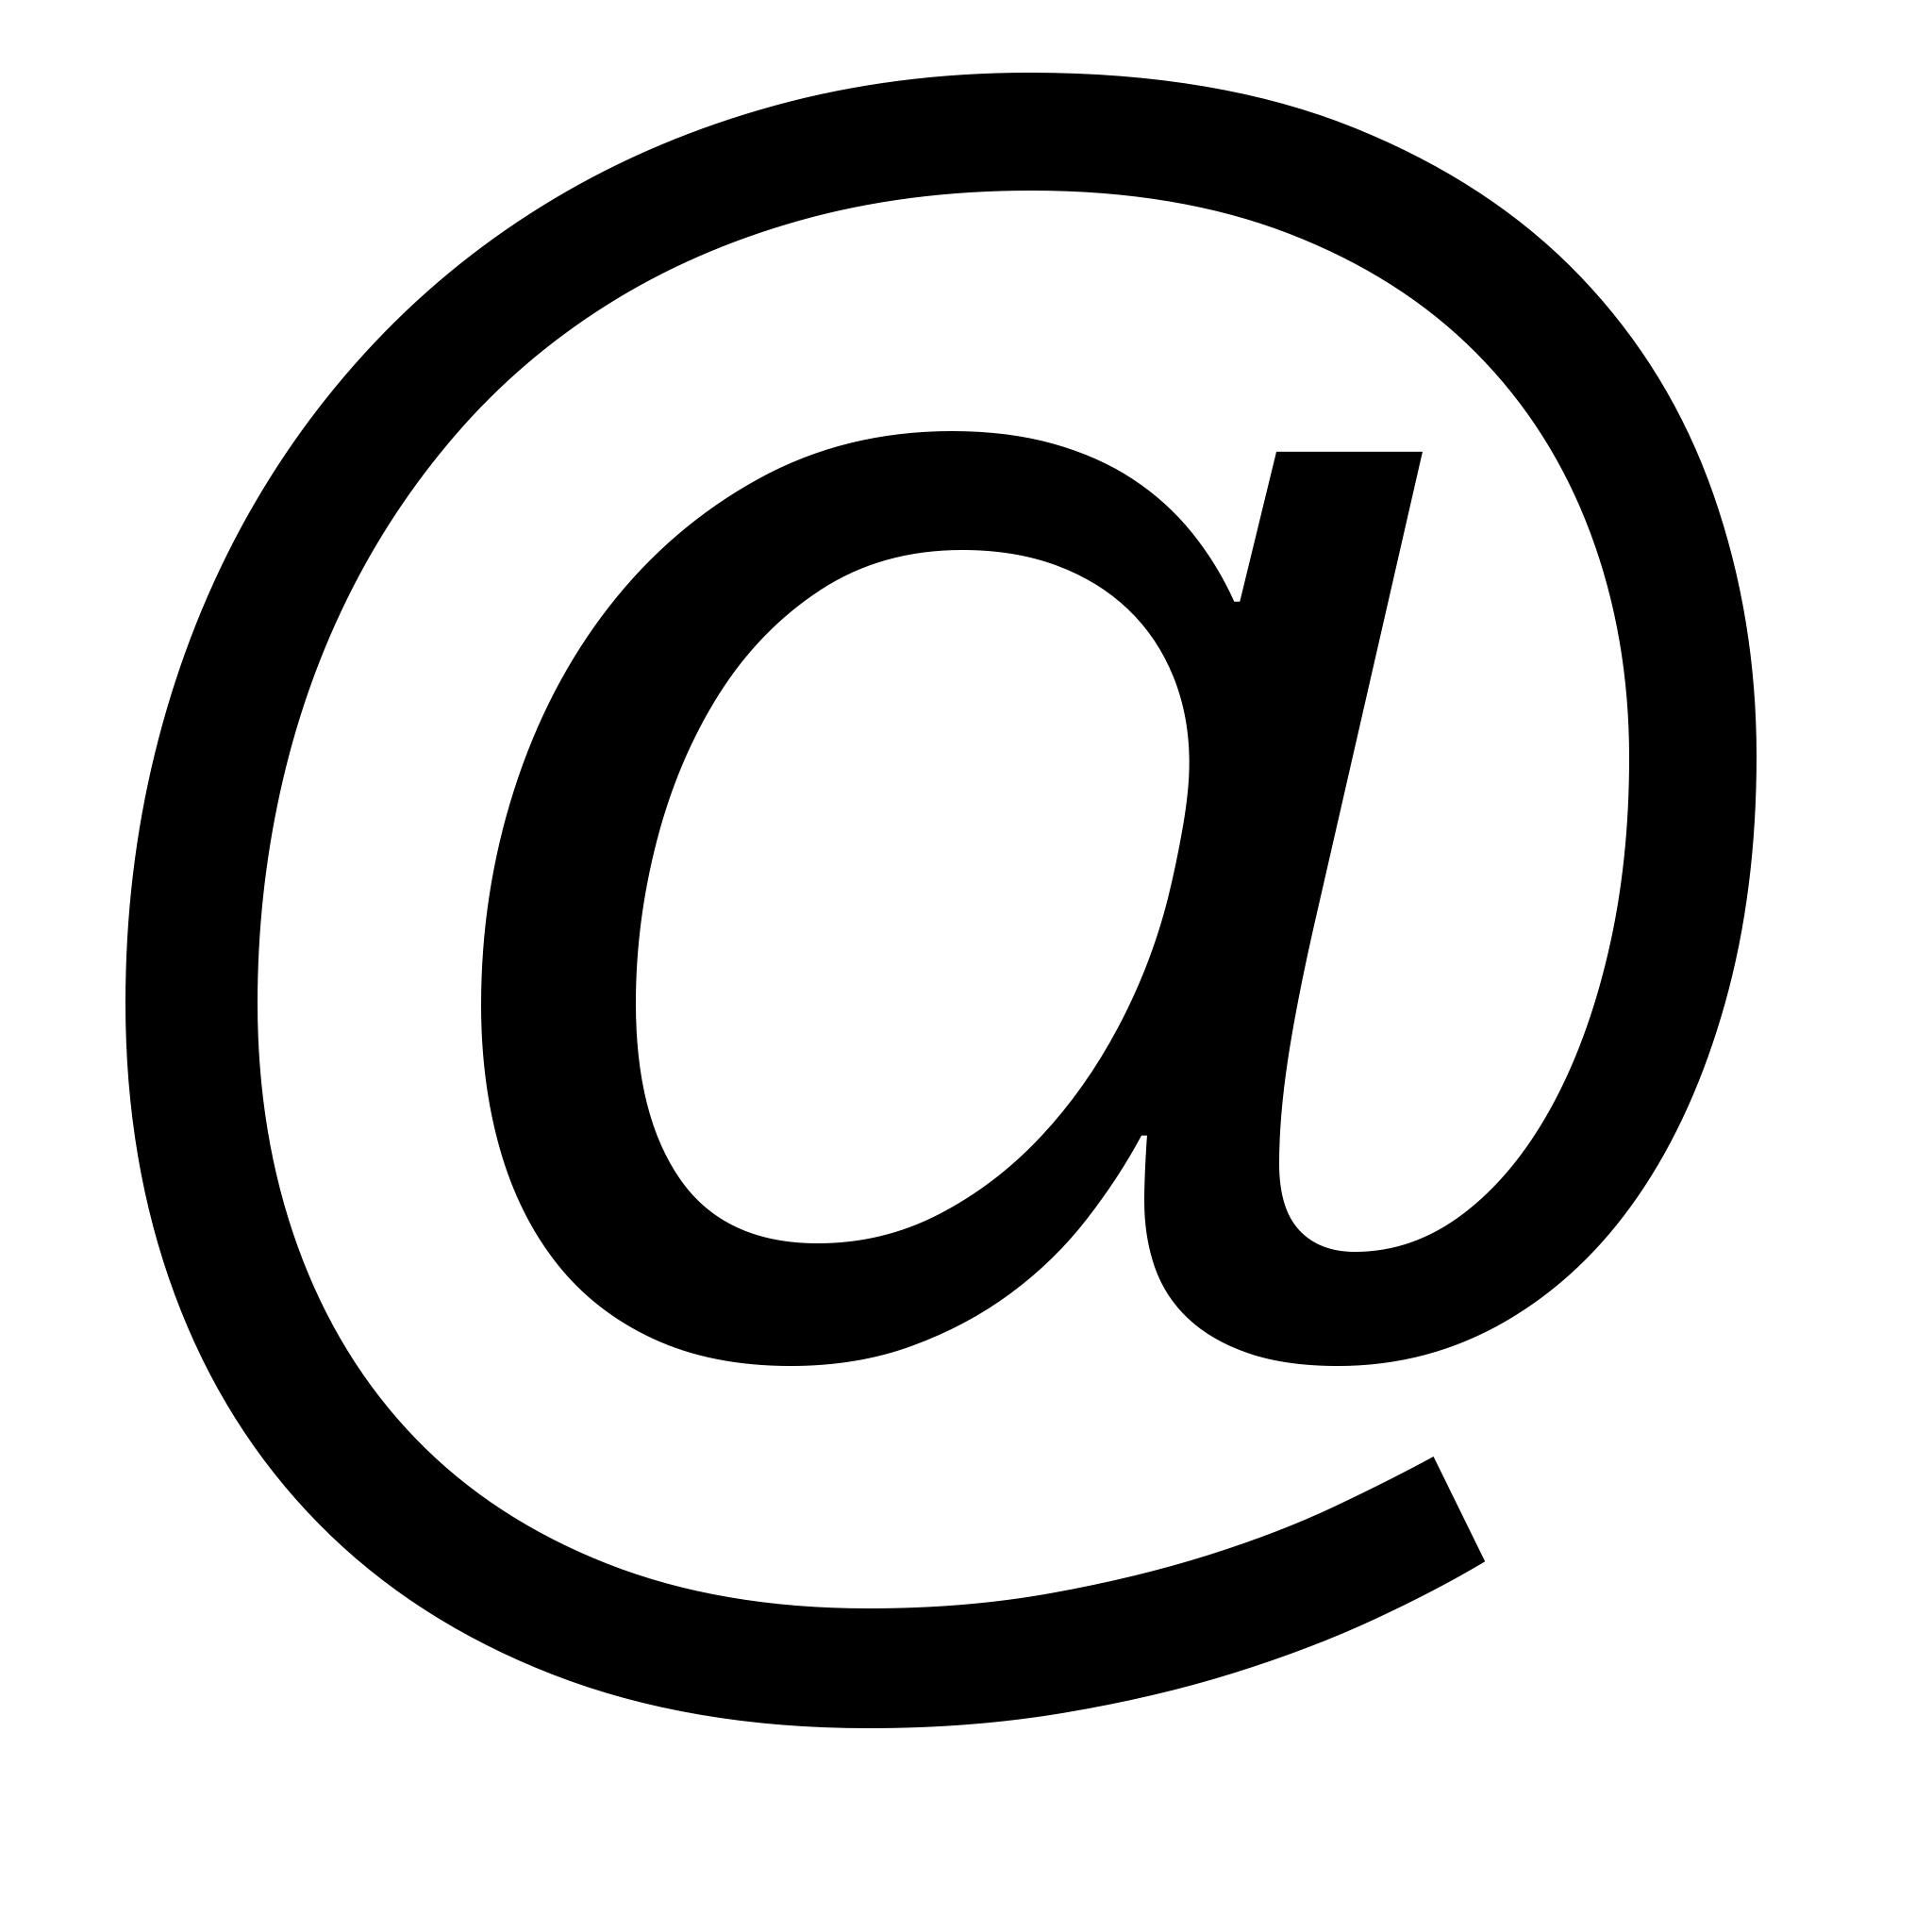 General 2048x2048 logo letter transparent background simple background